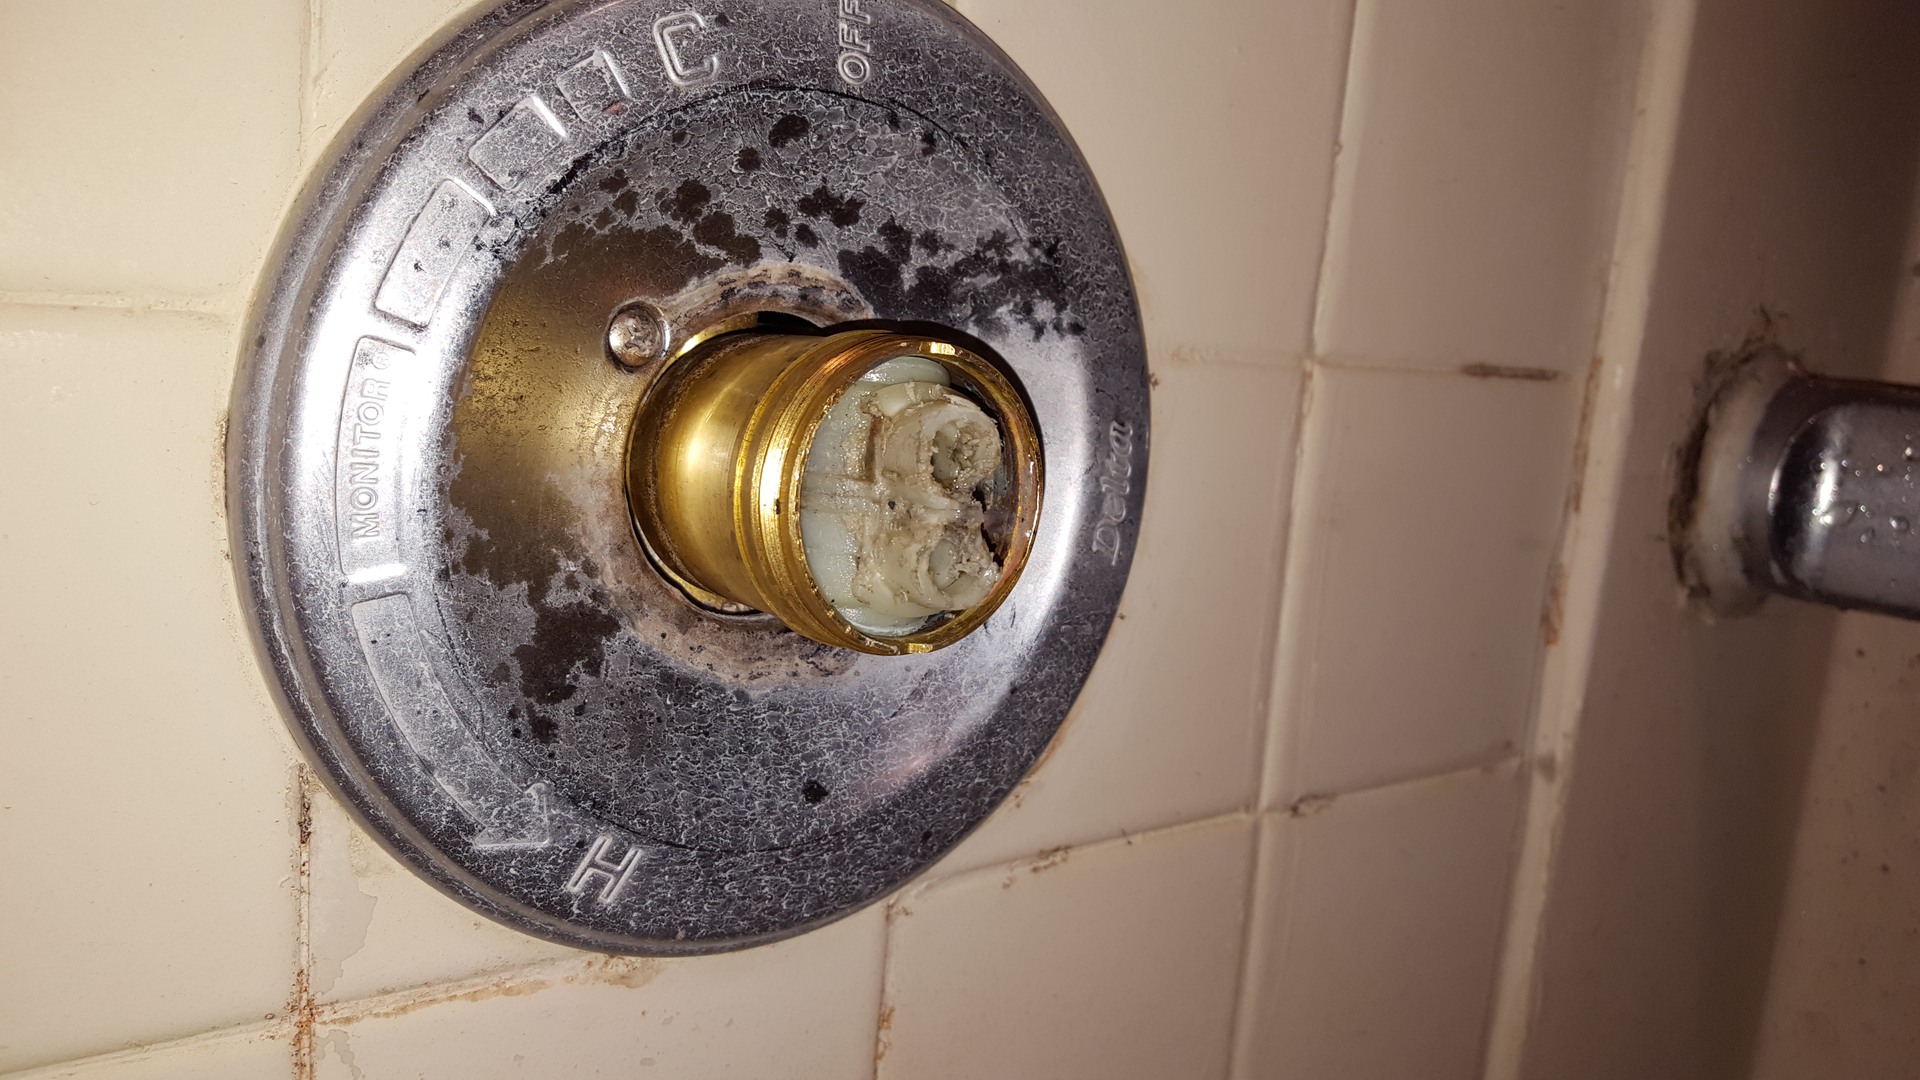 Shower Valve Saver Delta Faucet Cartridge Removal Tool Prevents